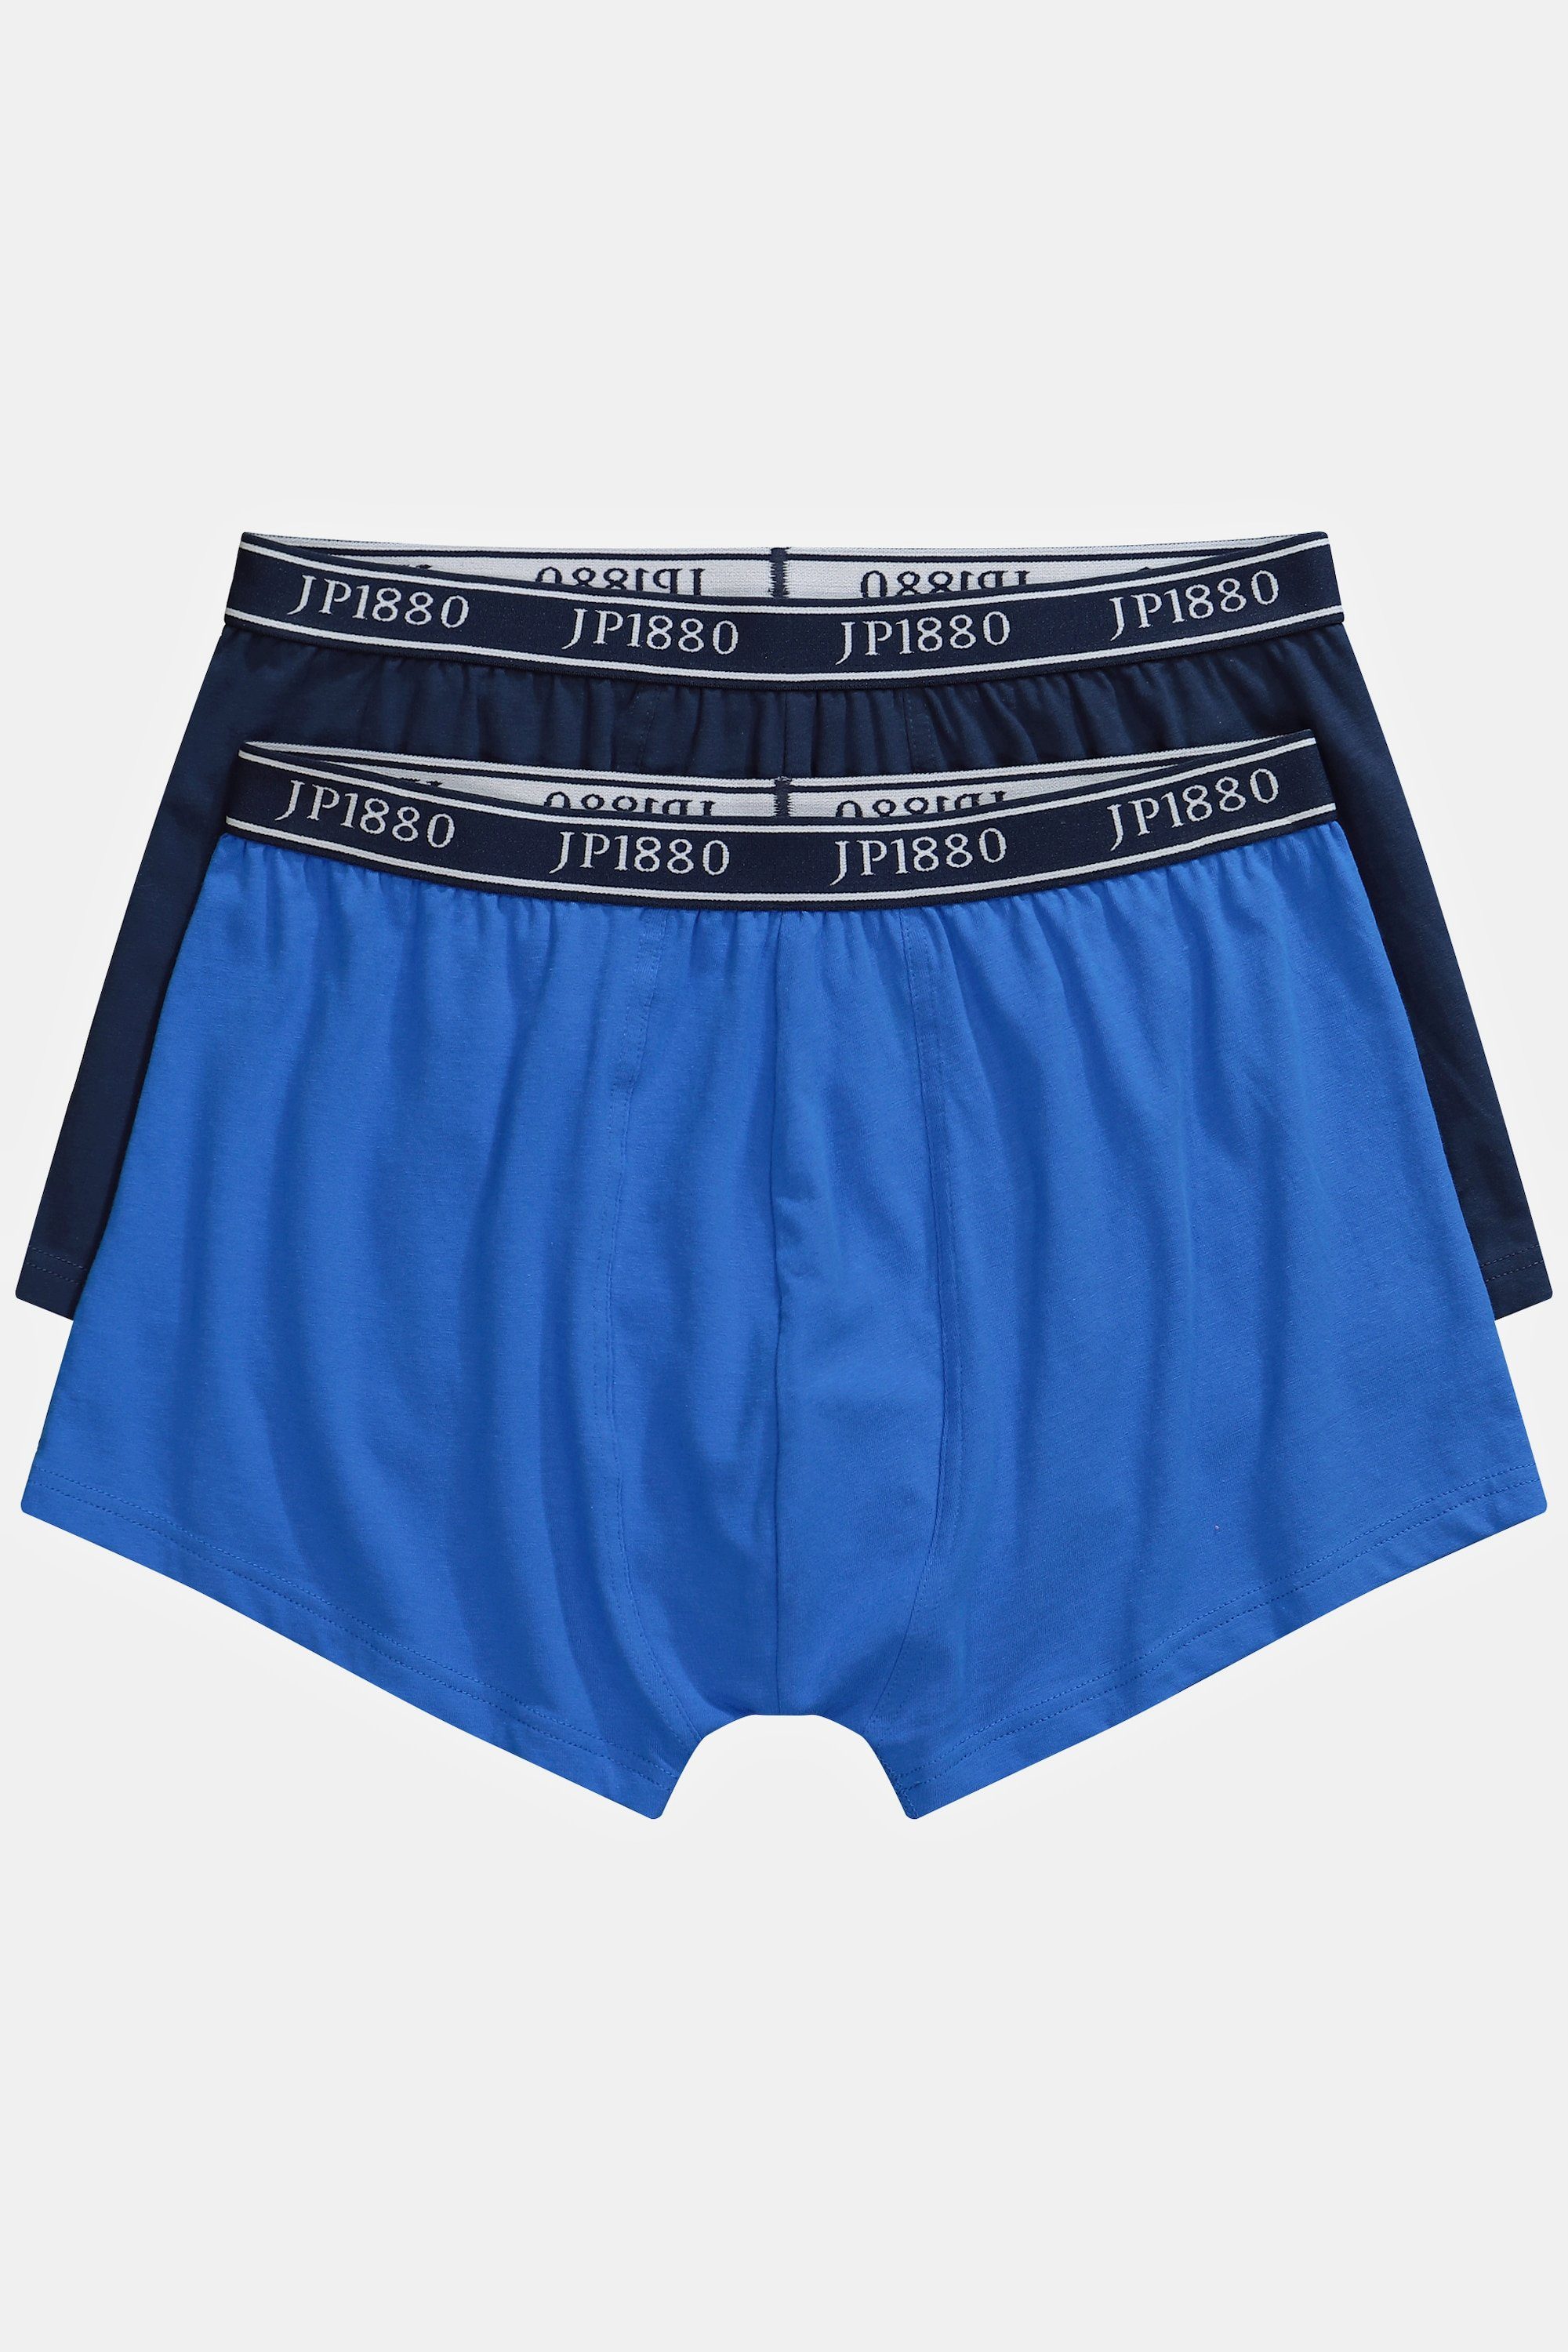 Unterhose Boxershorts lapisblau 2er-Pack FLEXNAMIC® JP1880 Hip-Pants